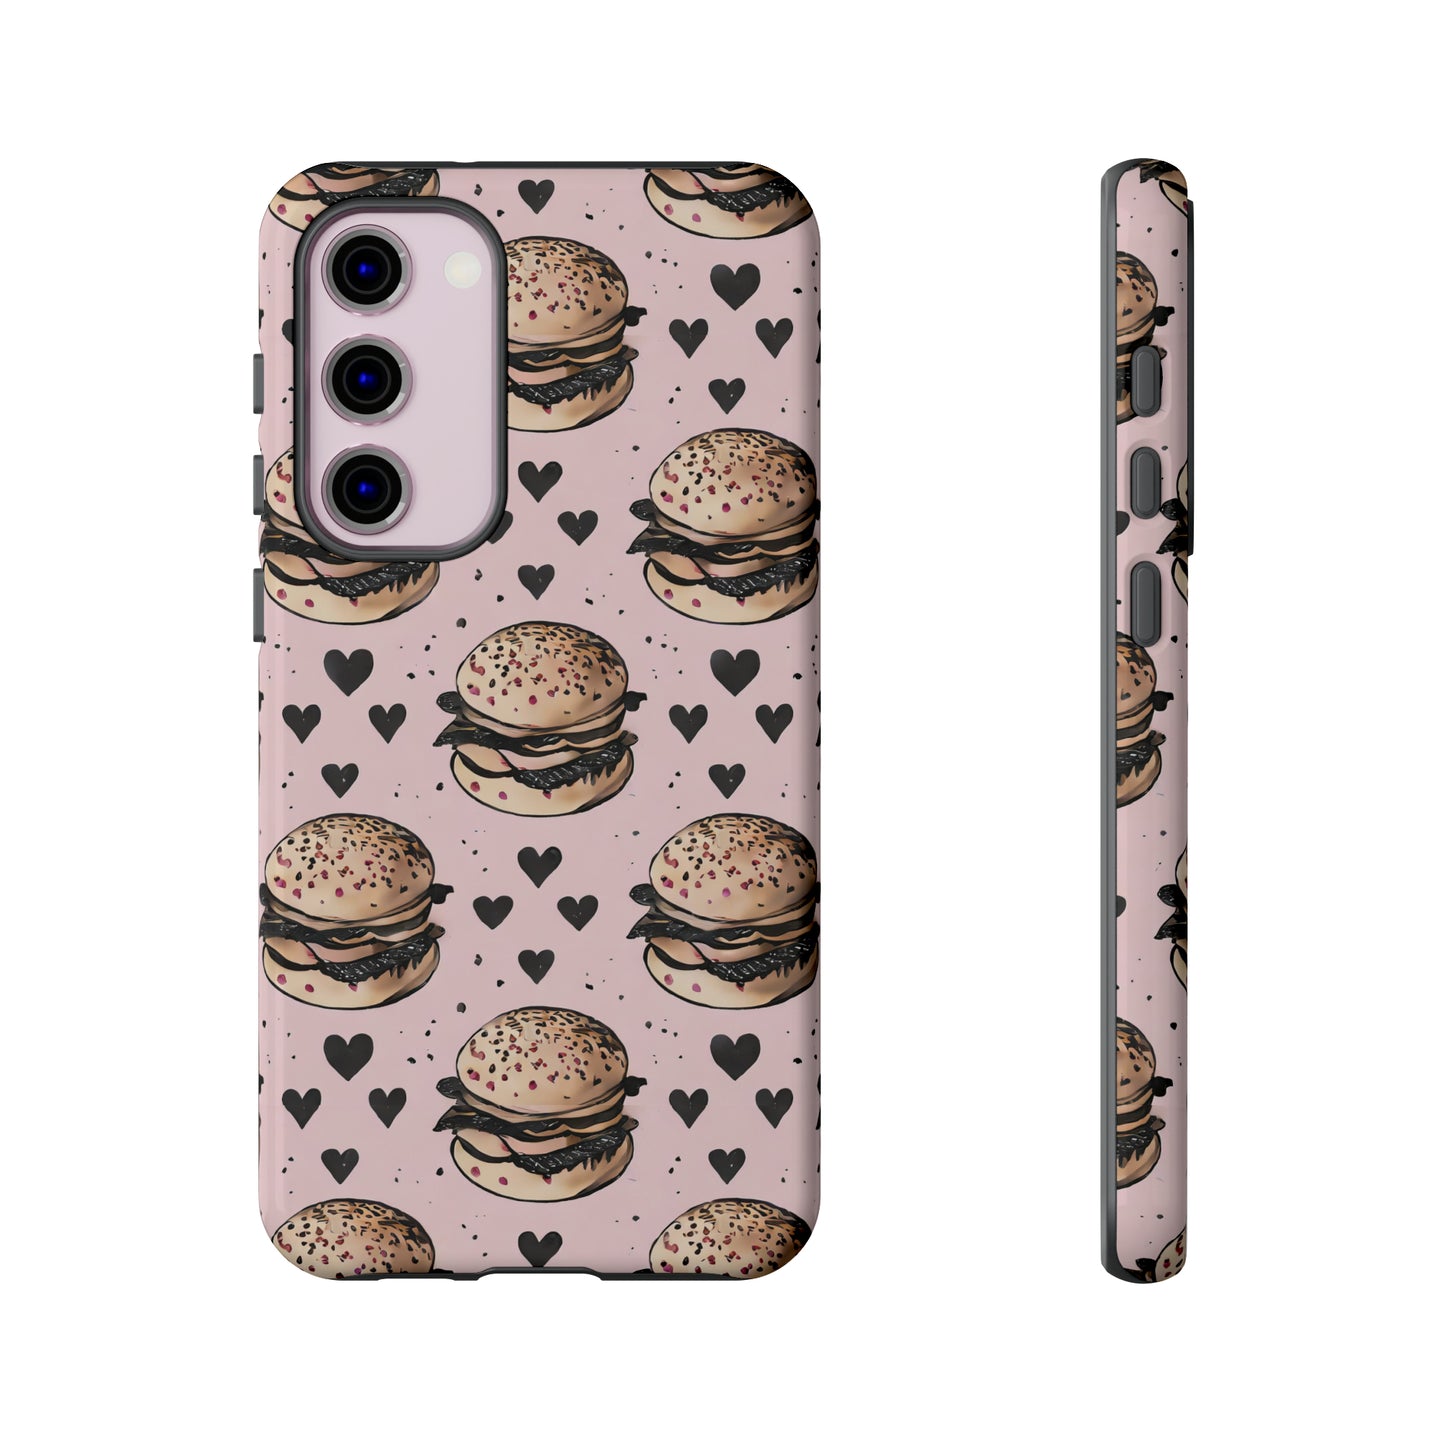 Hamburger phone Tough Cases